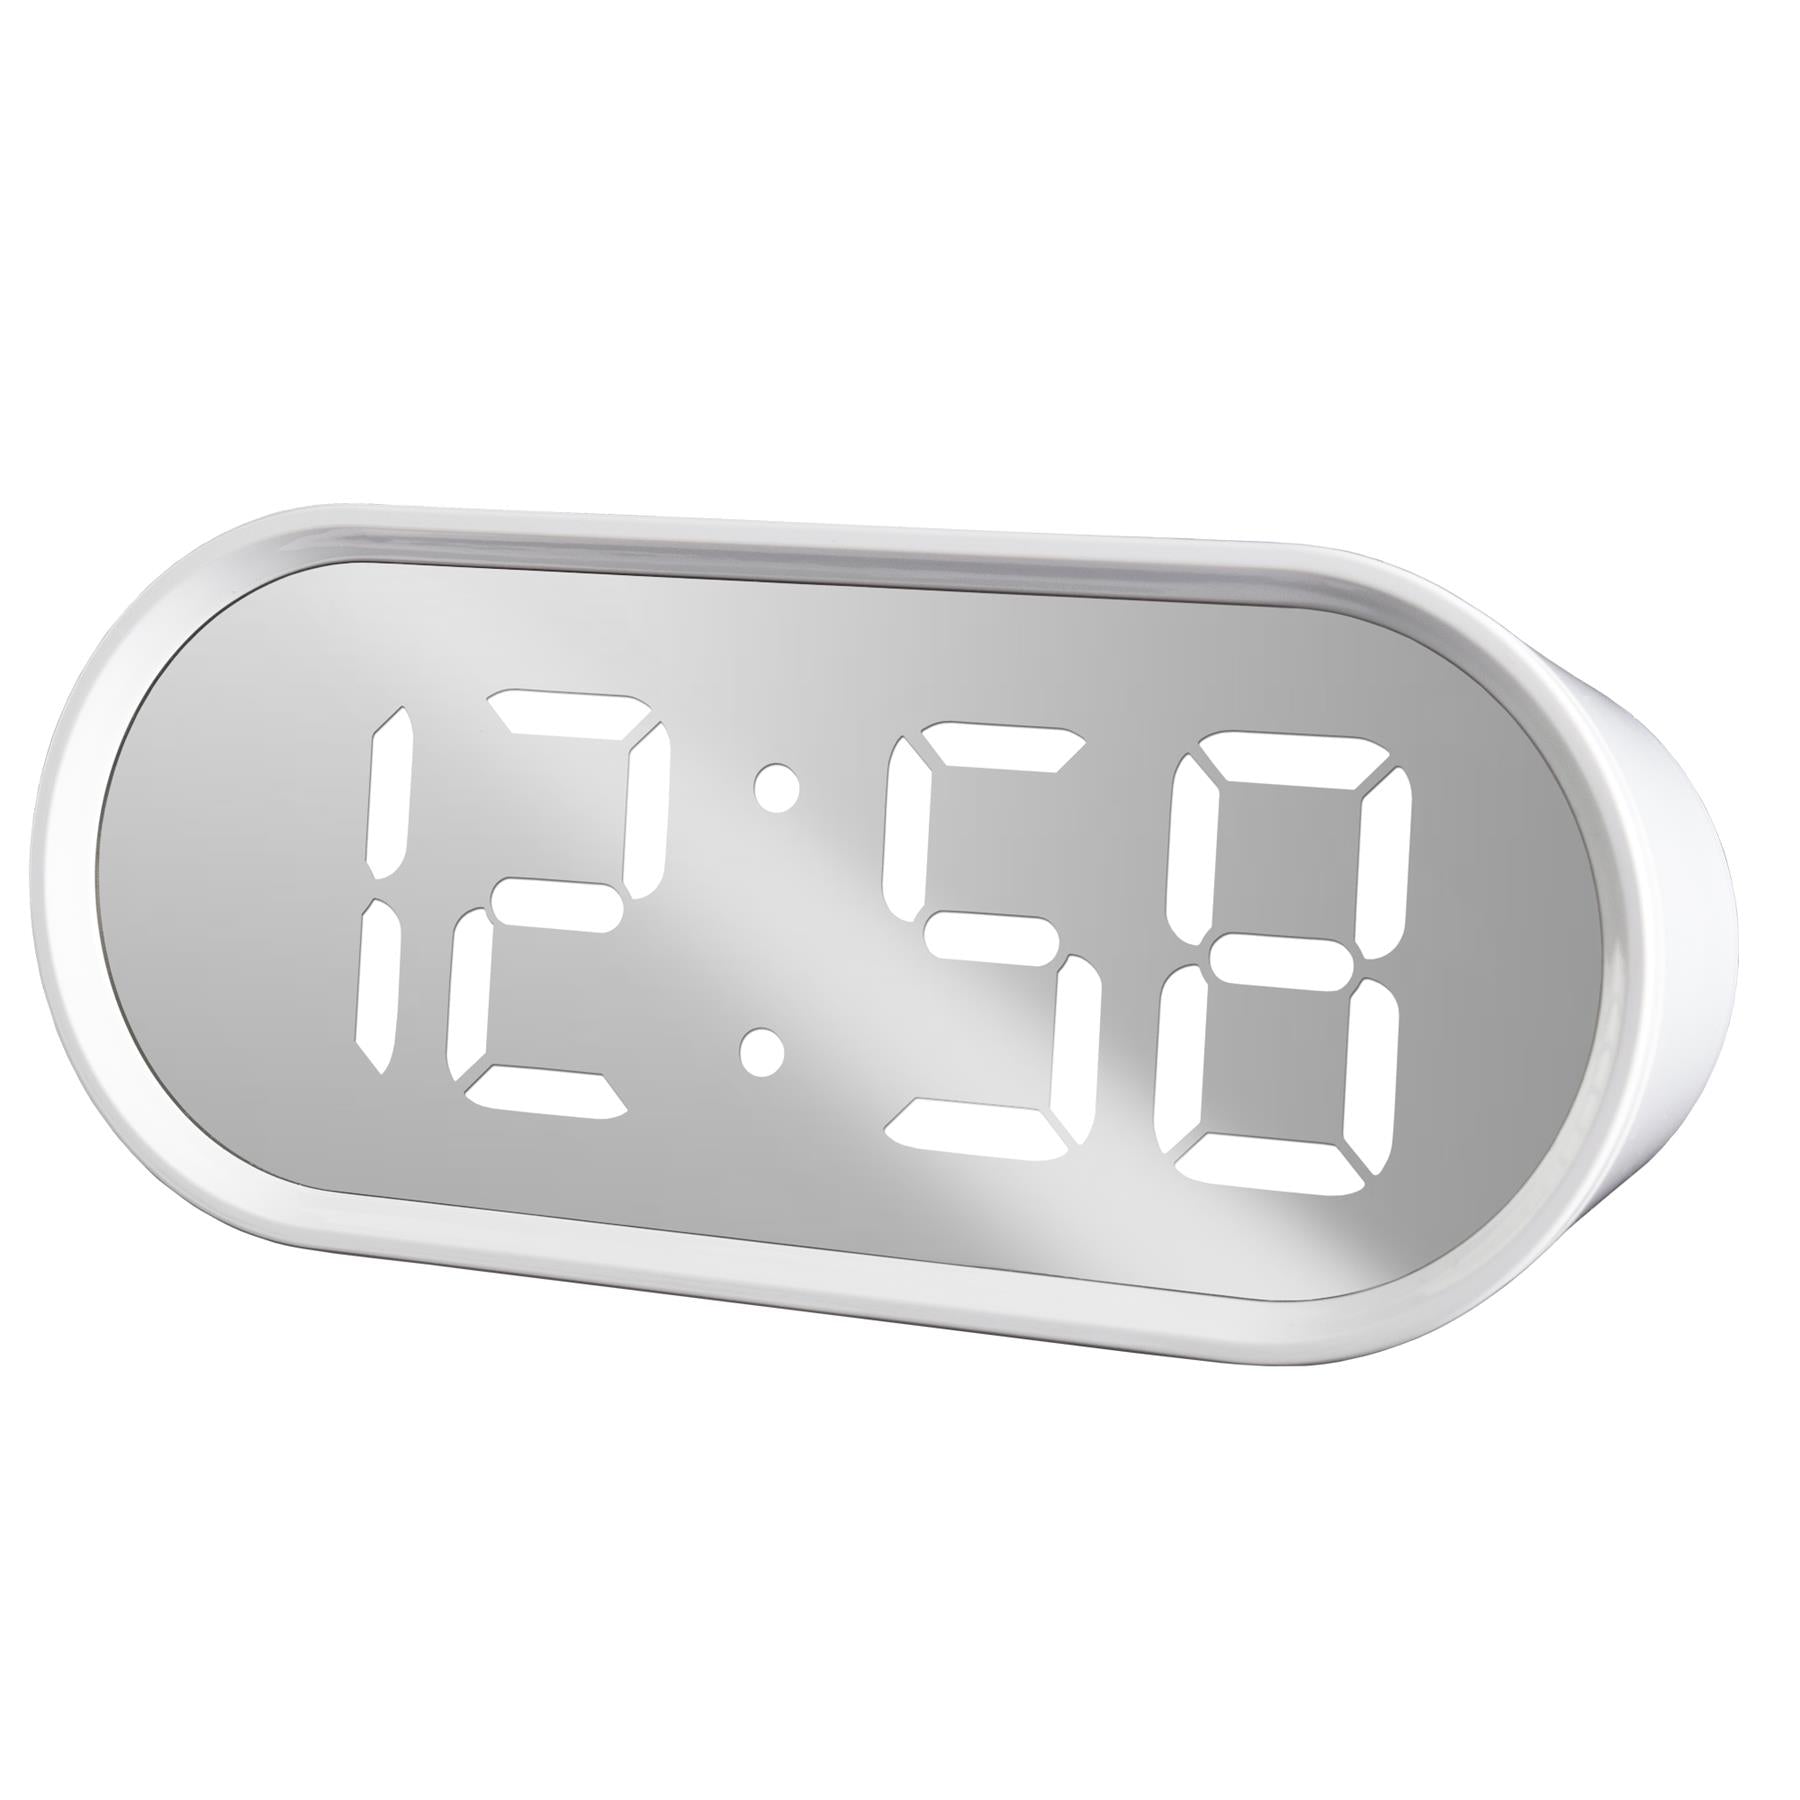 Acctim Cuscino White Digital USB Powered Alarm Clock 15822